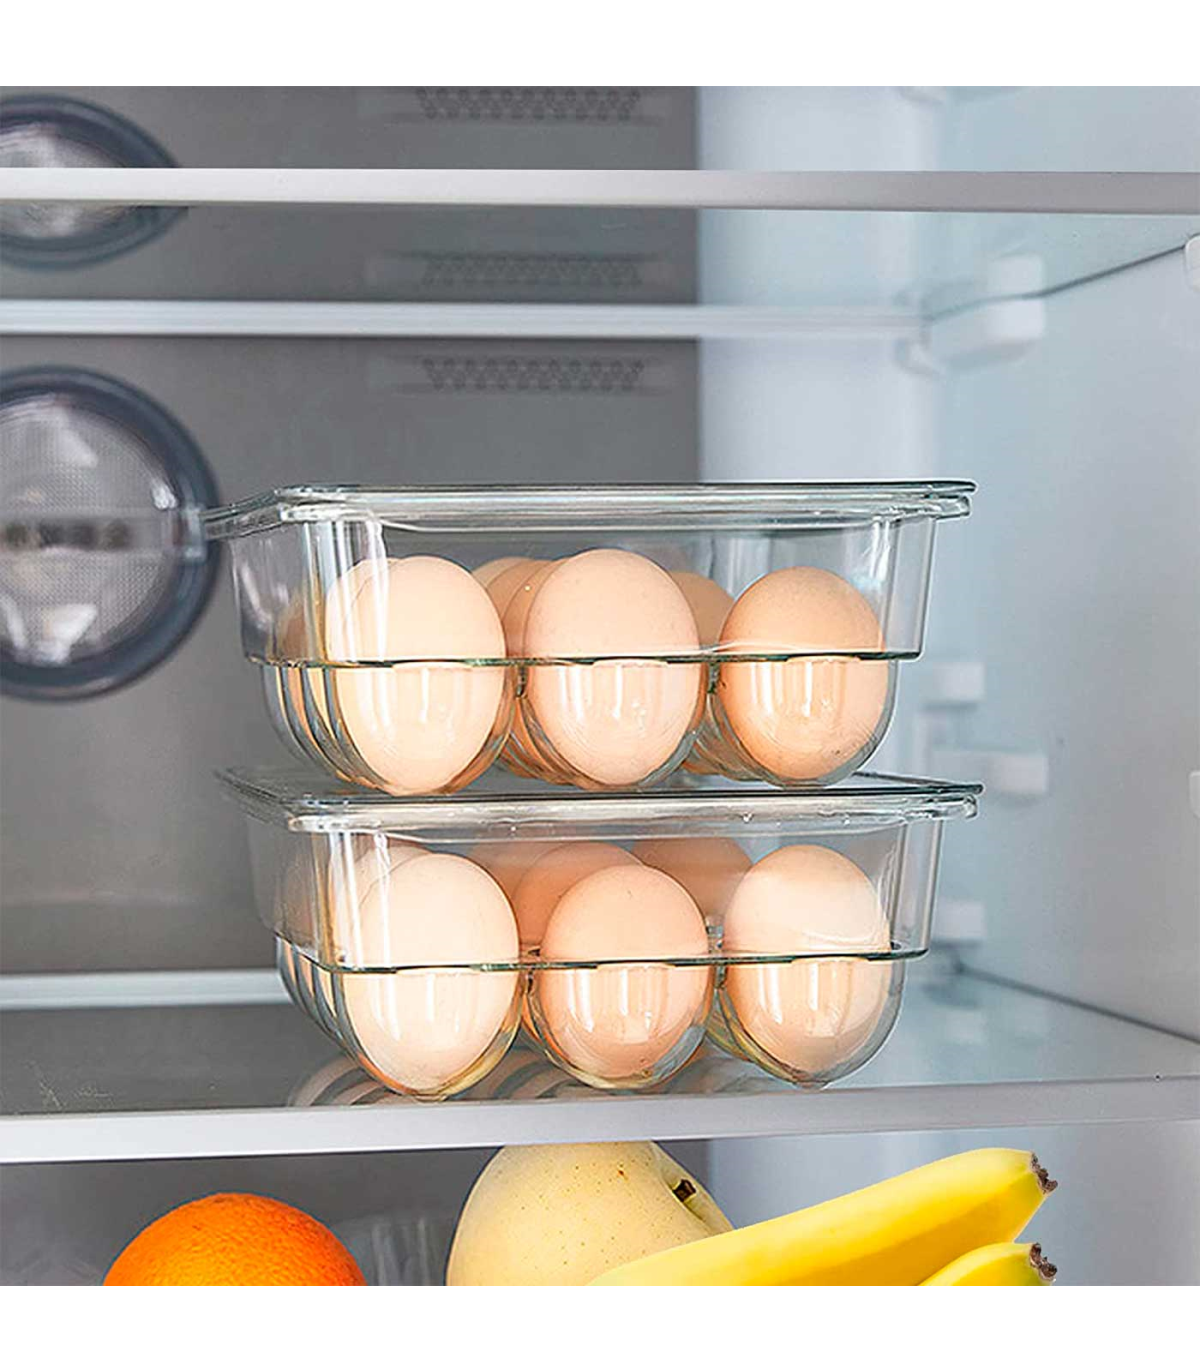 https://tradineur.com/101032-superlarge_default/tradineur--huevera-rectangular-de-plastico-transparente-recipiente-para-12-huevos-almacenamiento-de-cocina-fabricada-en-espana-1.jpg